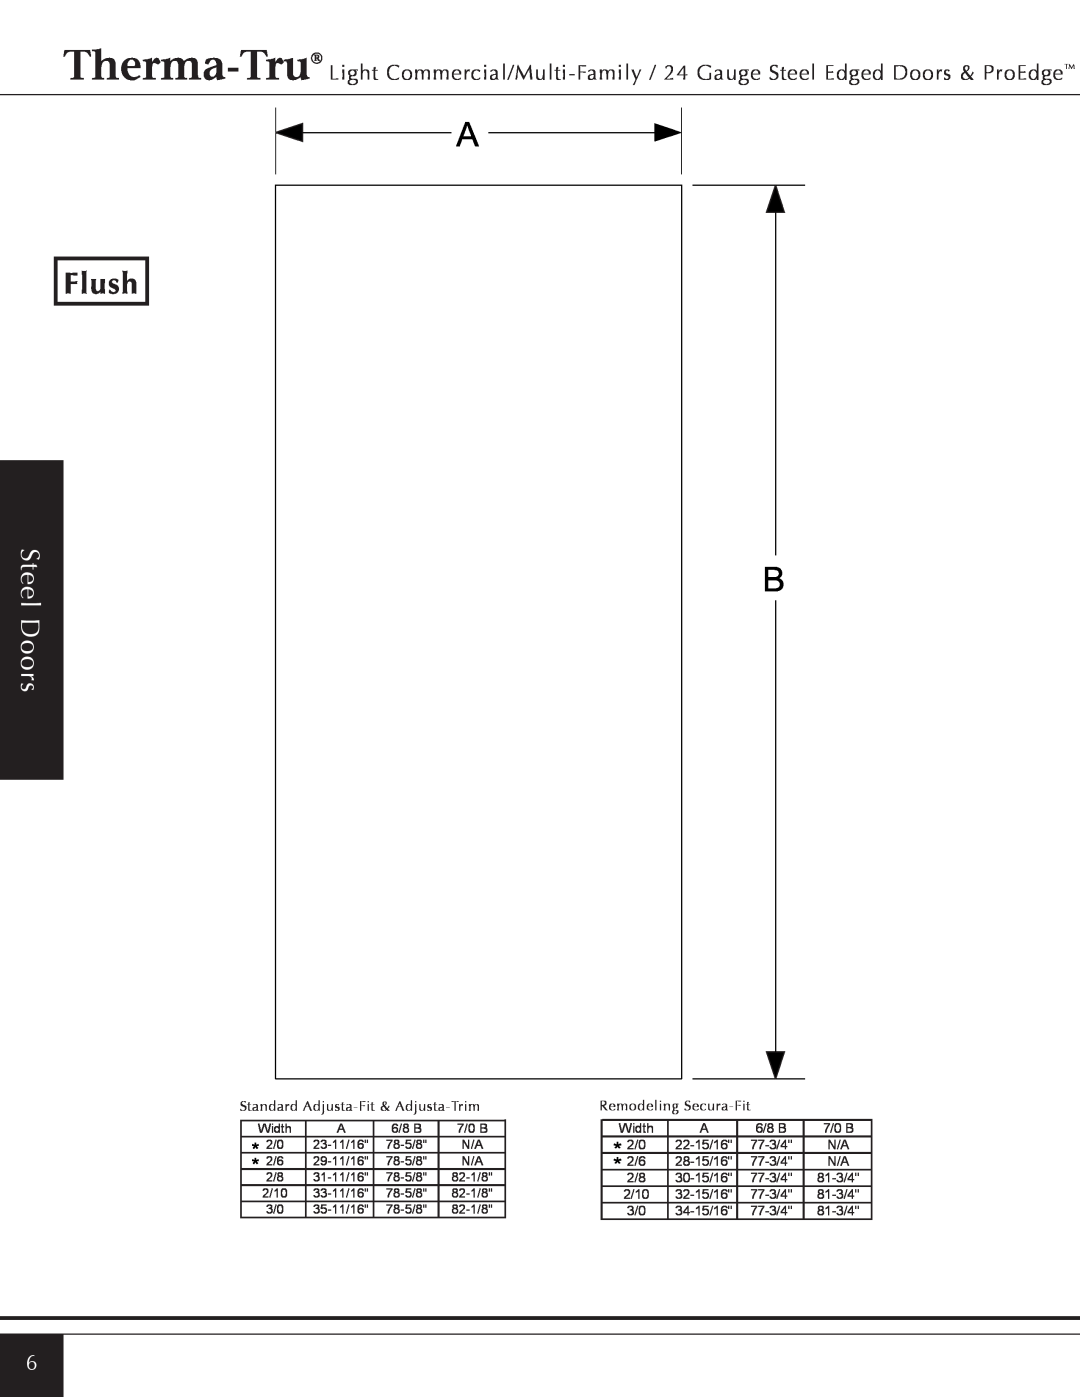 Therma-Tru Light Commercial/Multi-Family / 22 & 24 Gauge Steel Edged Door manual Flush, Steel Doors, Remodeling Secura-Fit 